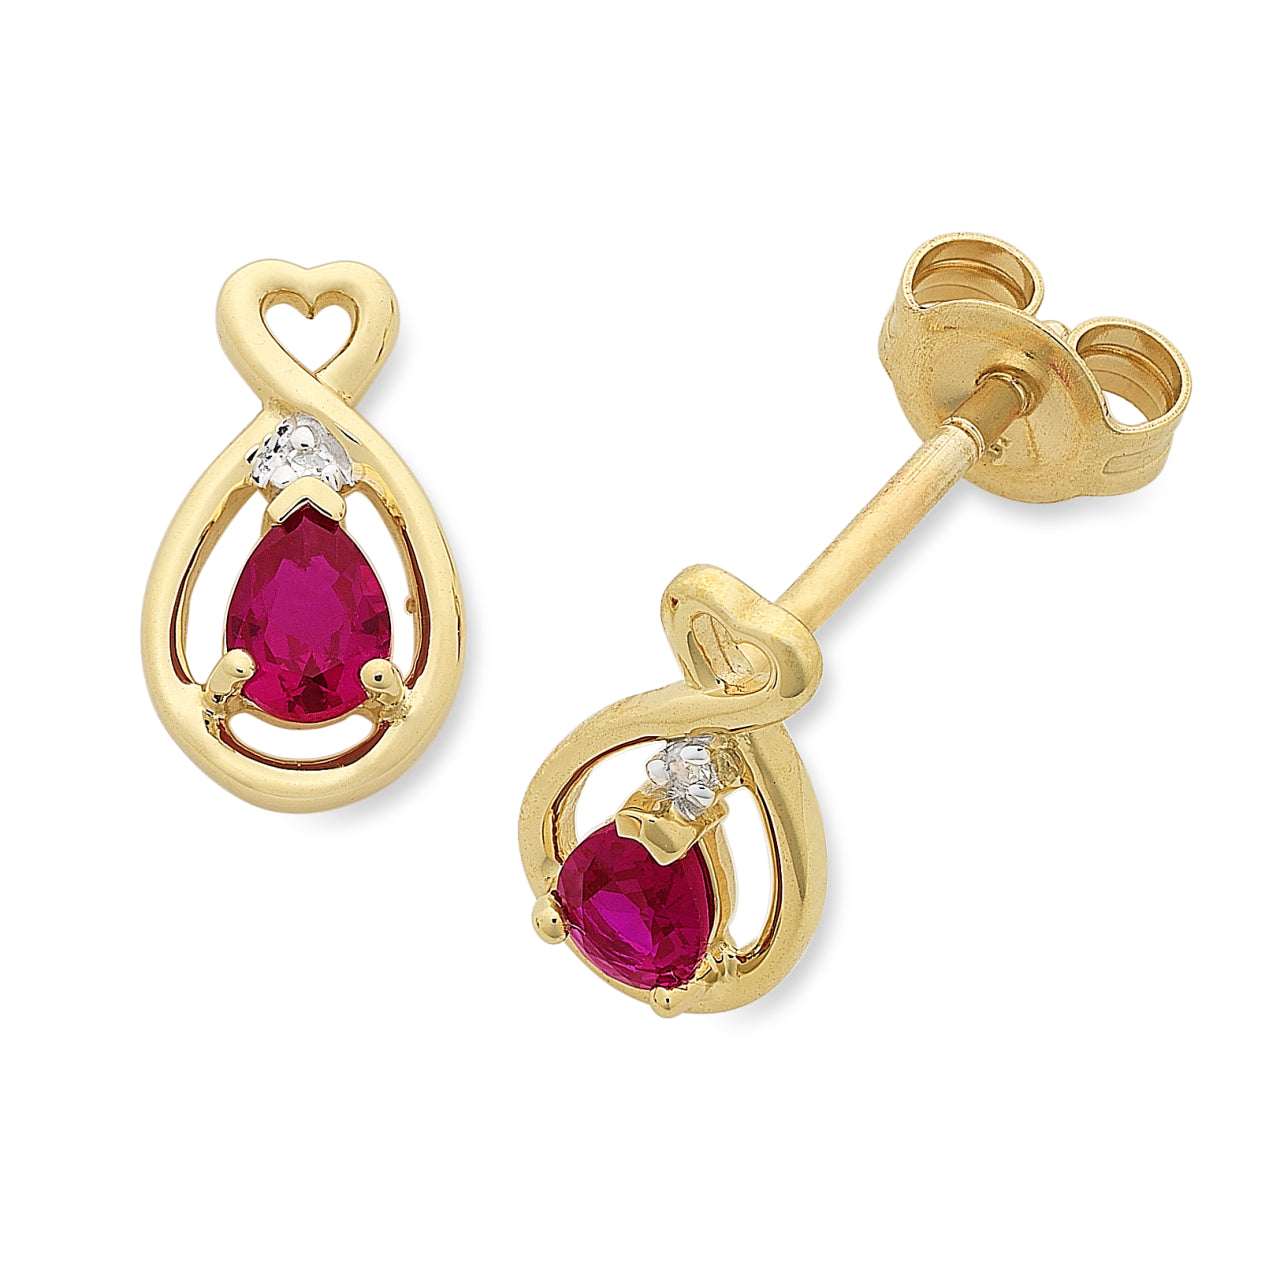 9k gold created ruby & diamond earrings